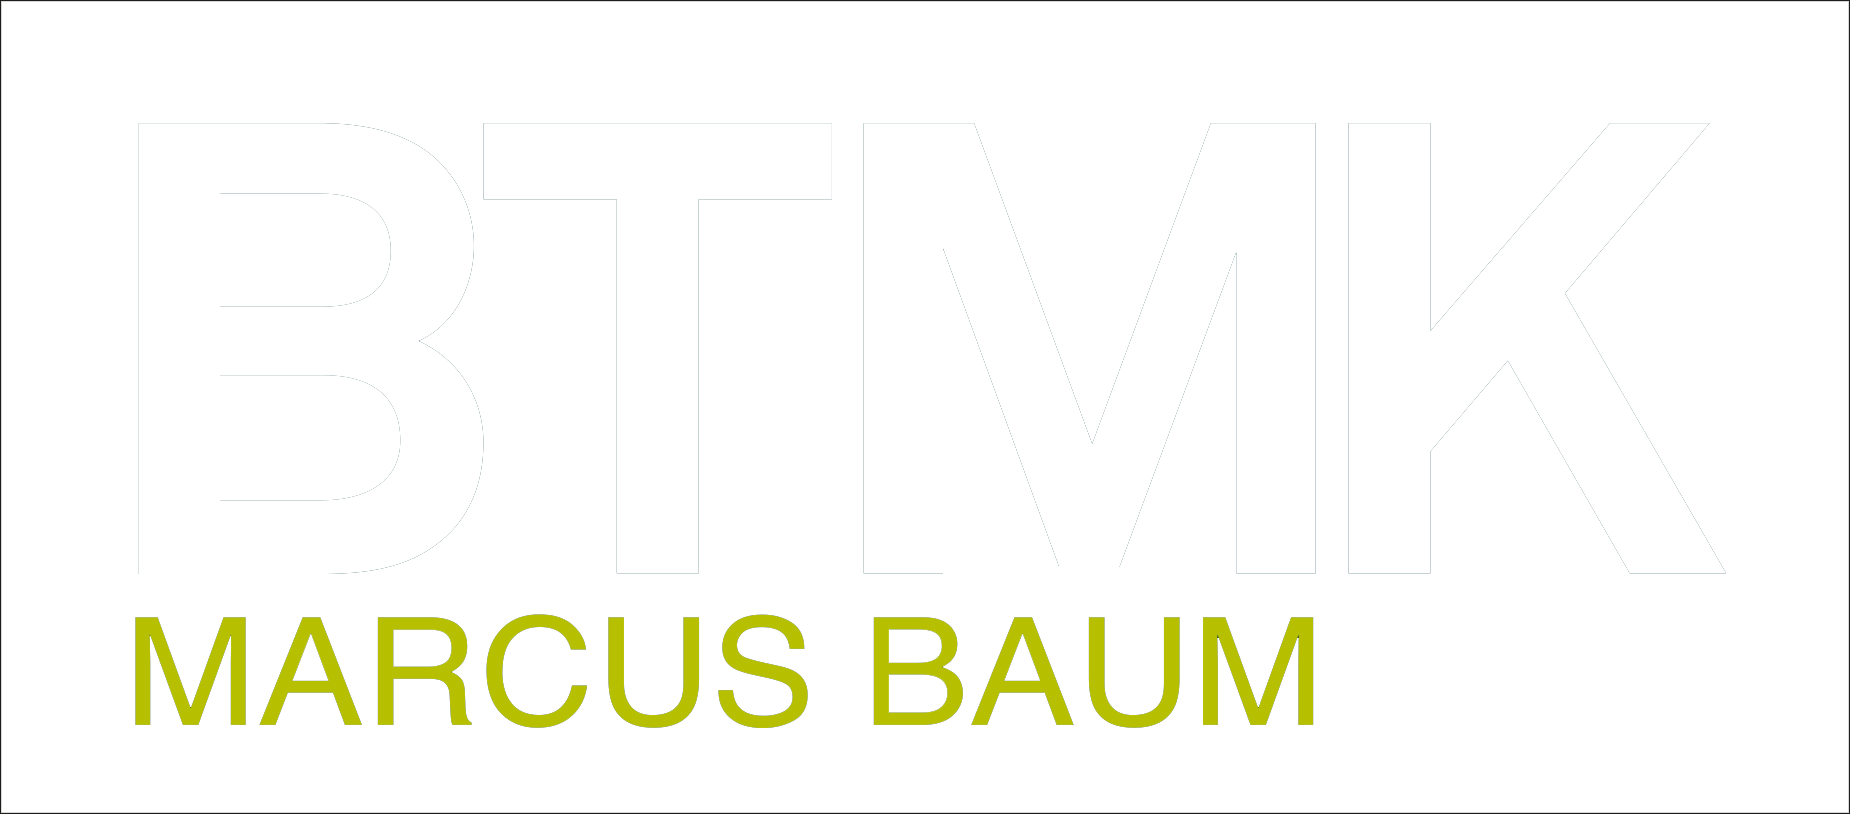 BTMK Marcus Baum